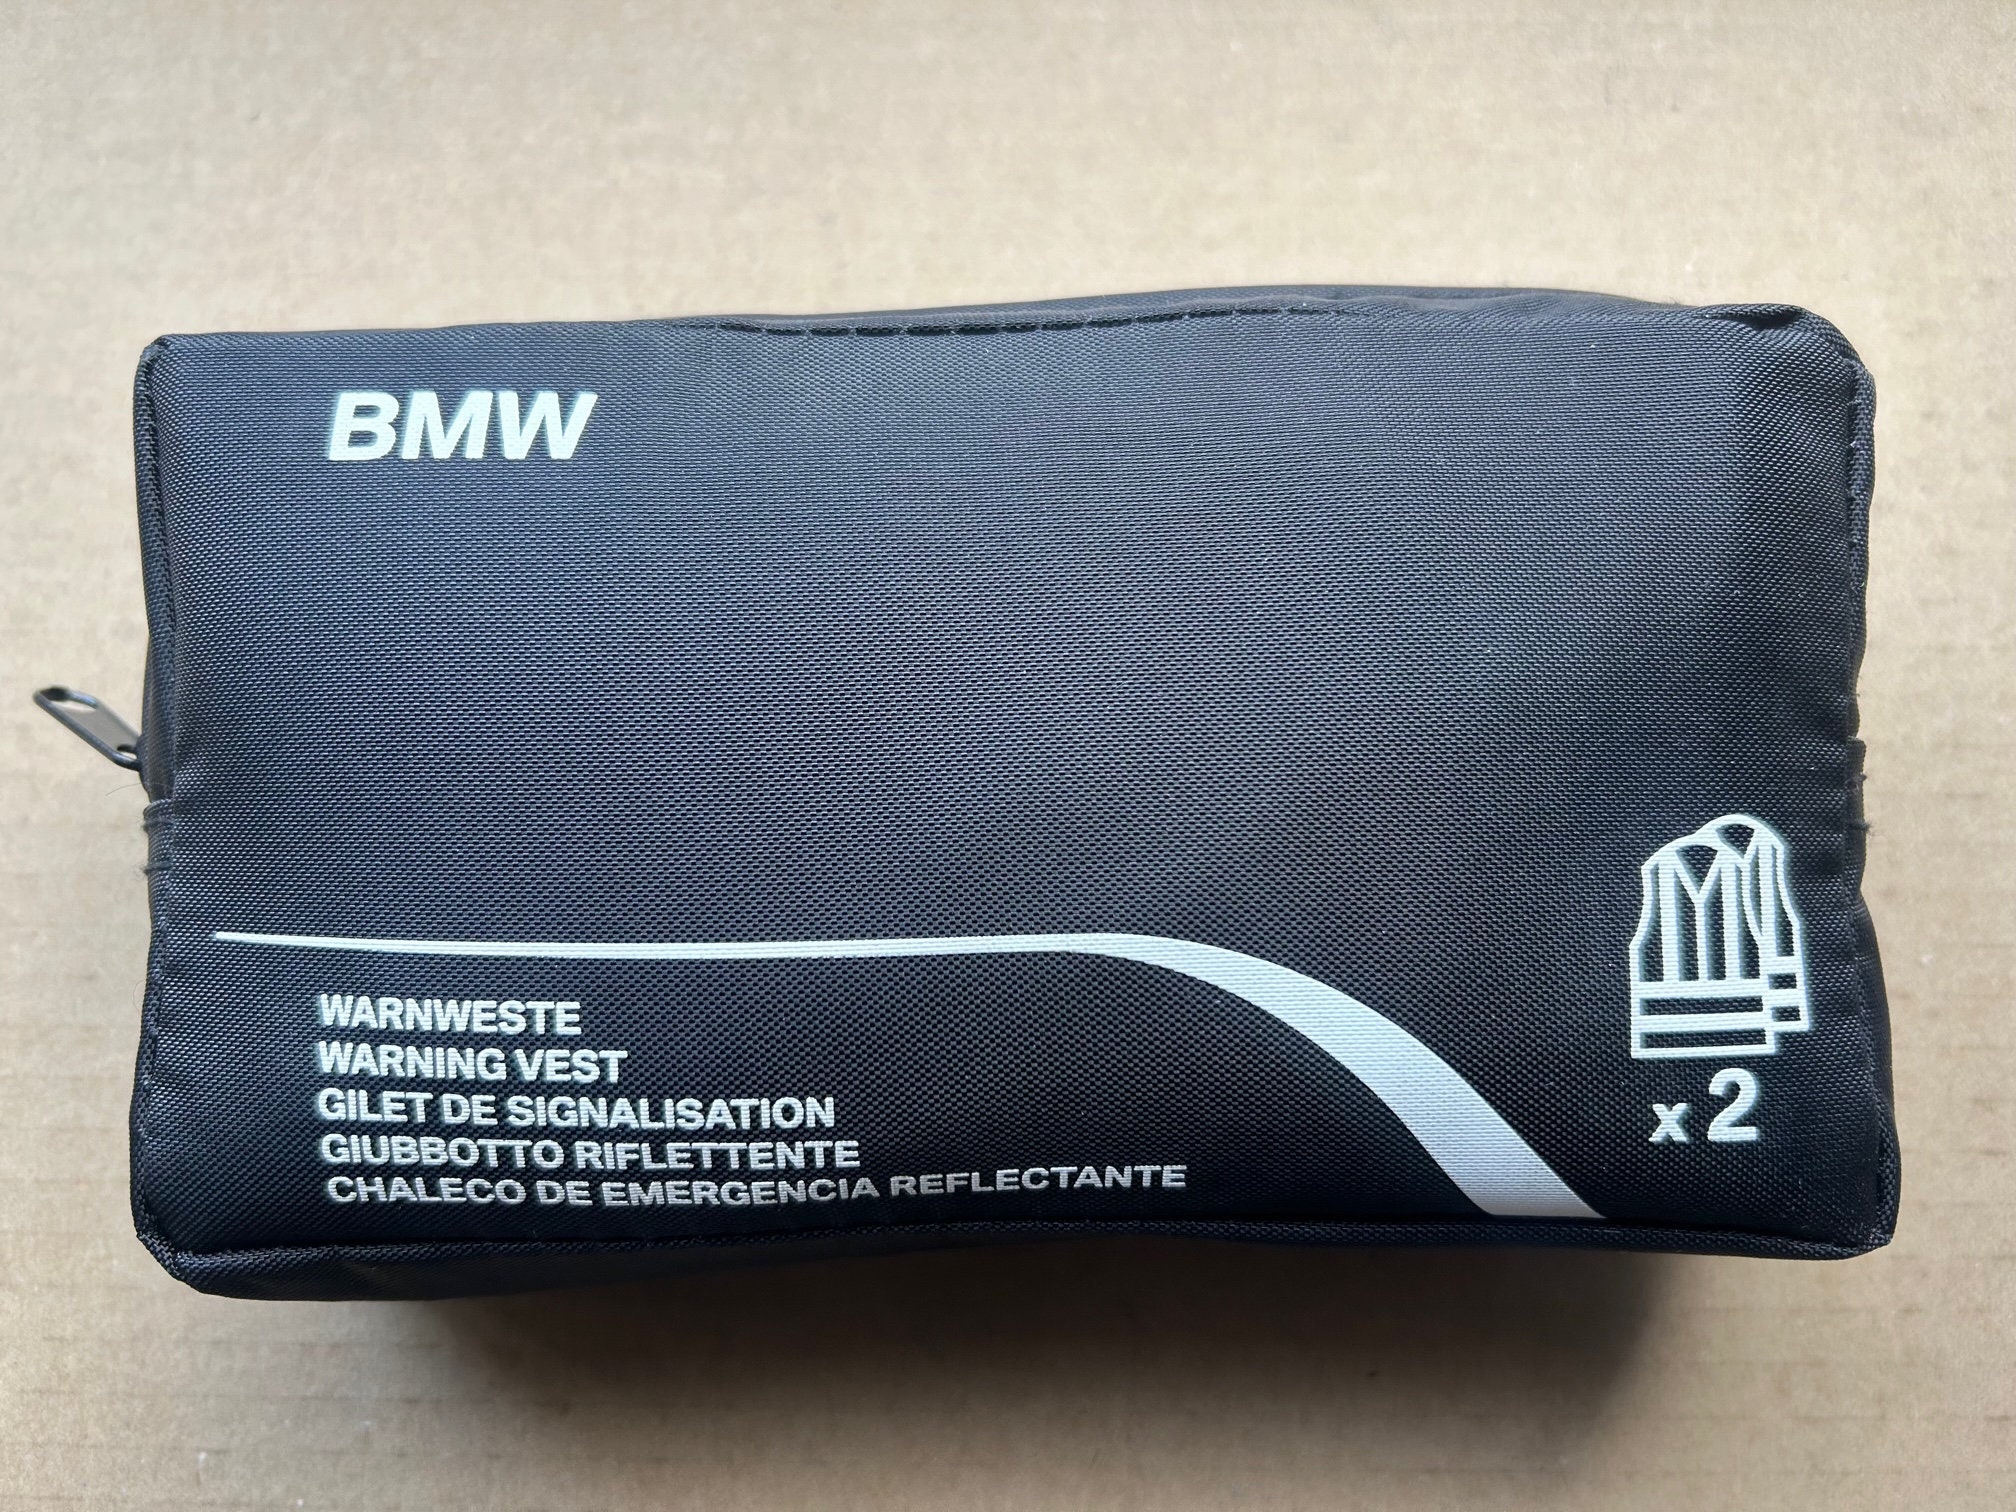 BMW Warnweste in Nylontasche